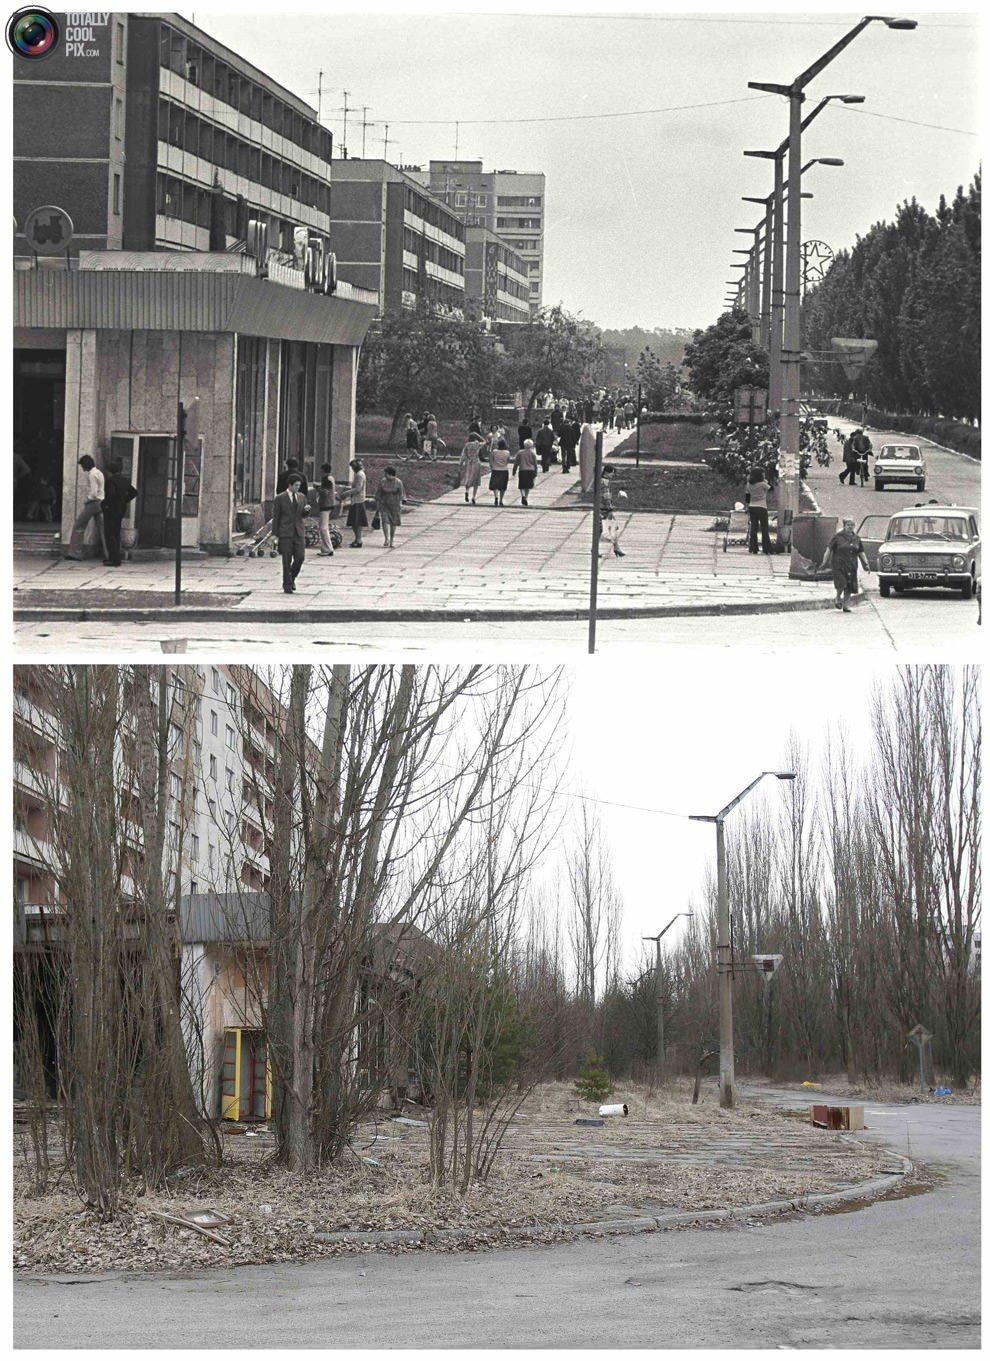 https://www.mobgenic.com/wp-content/uploads/2012/07/chernobyl_009.jpeg